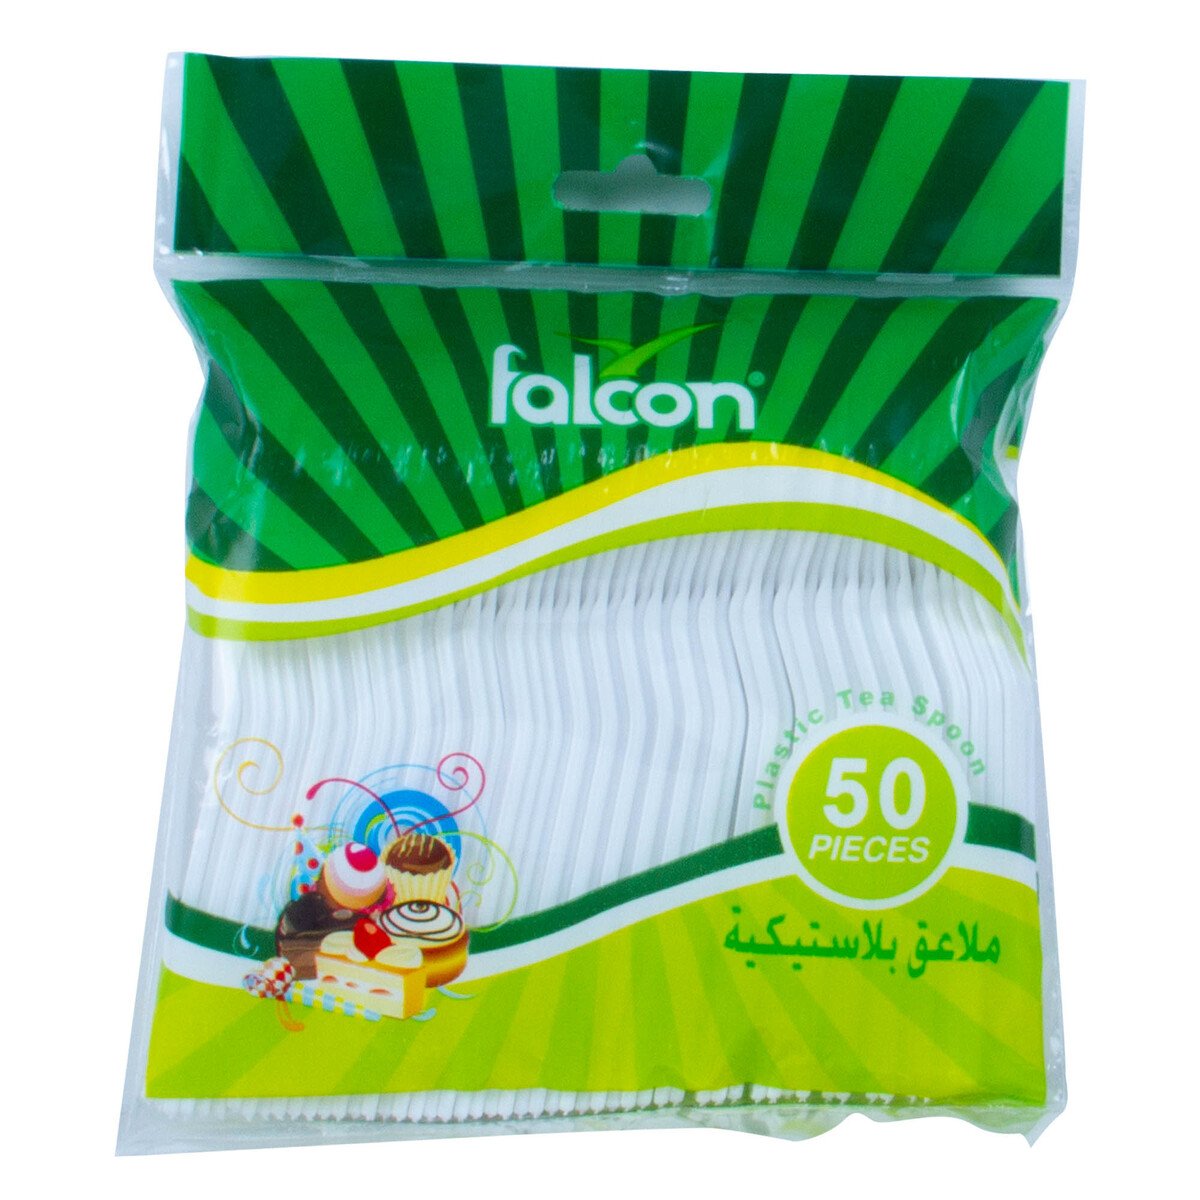 Falcon Plastic Teaspoon 50pcs